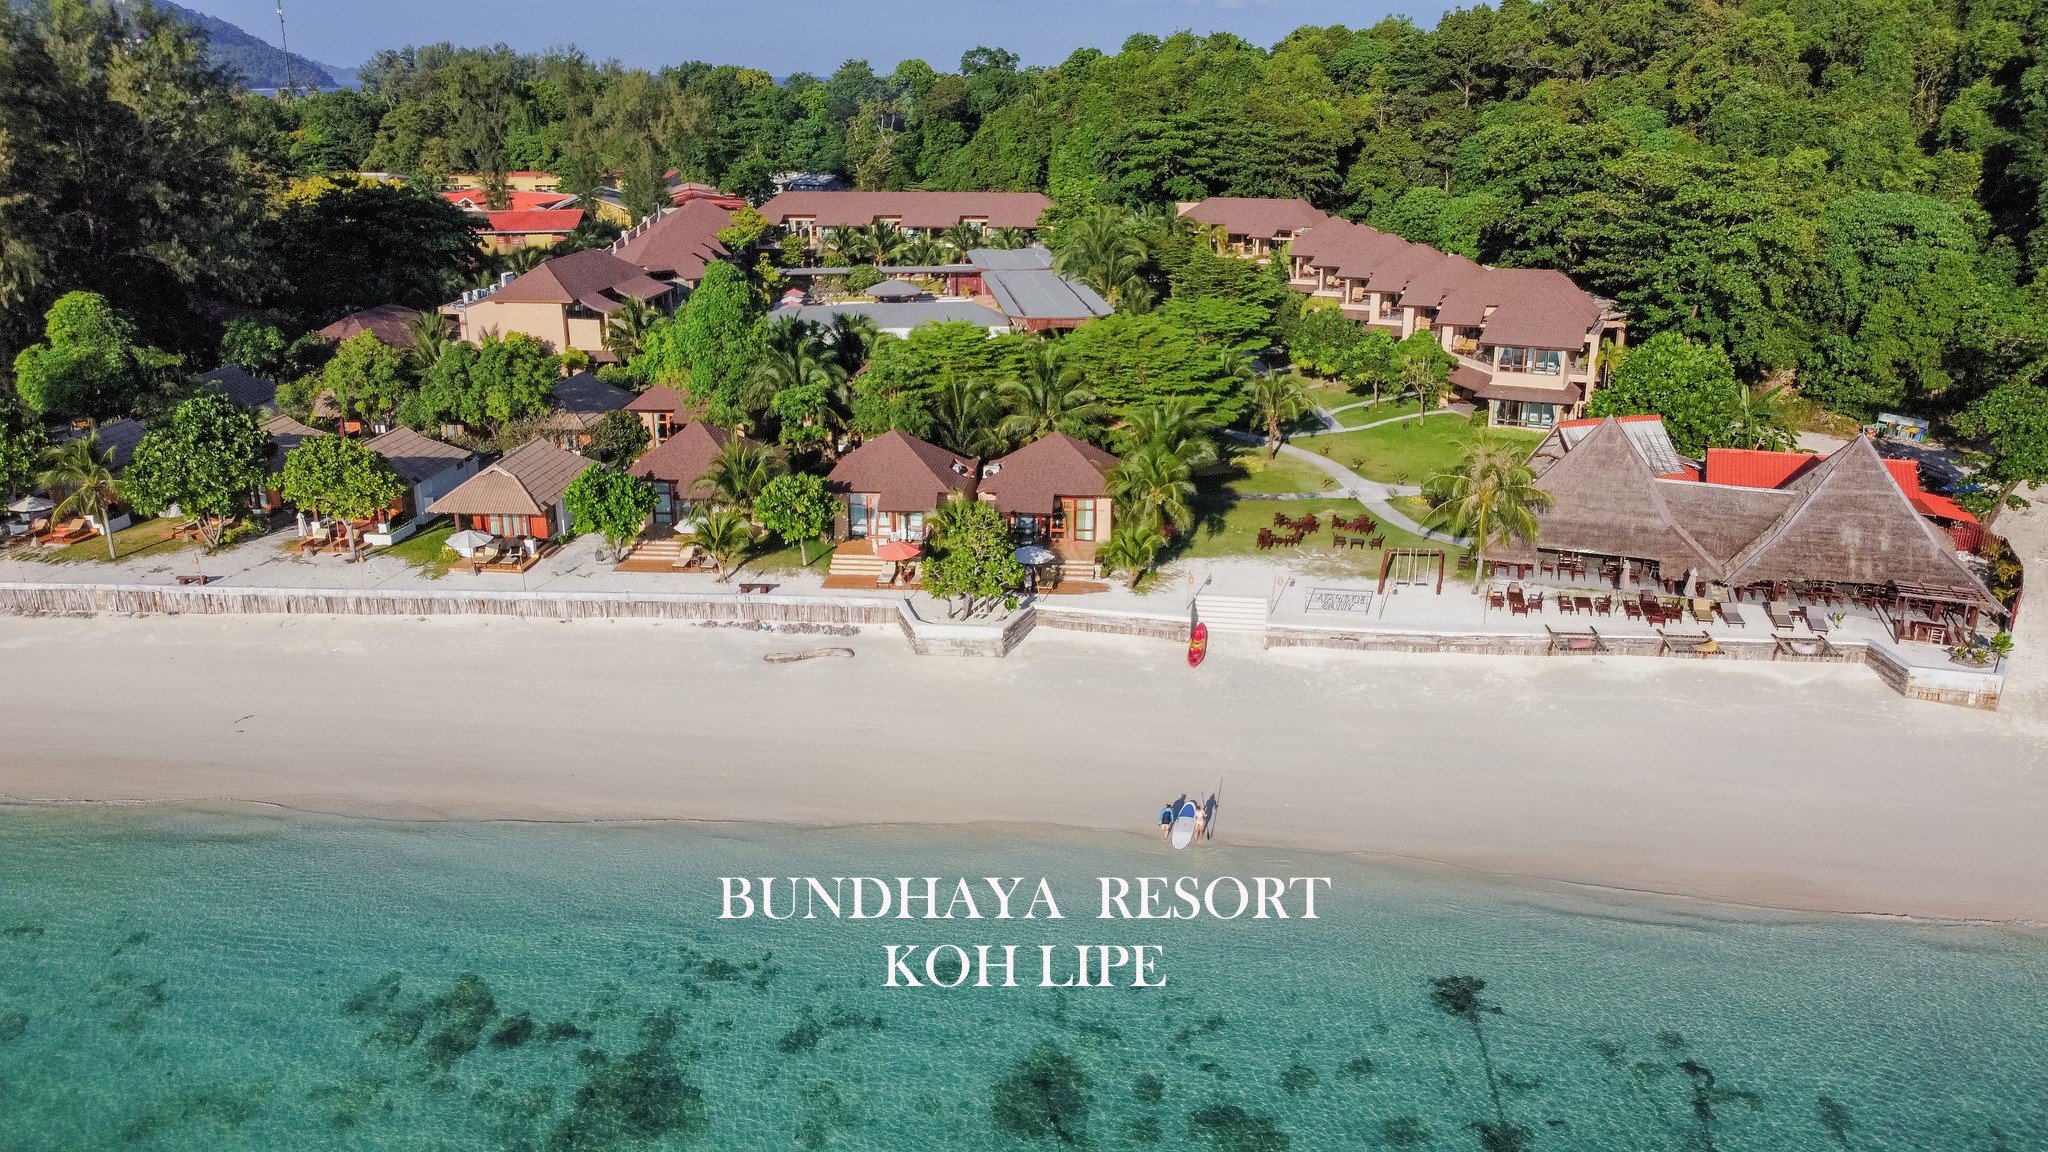 I43 Bundhaya Resort